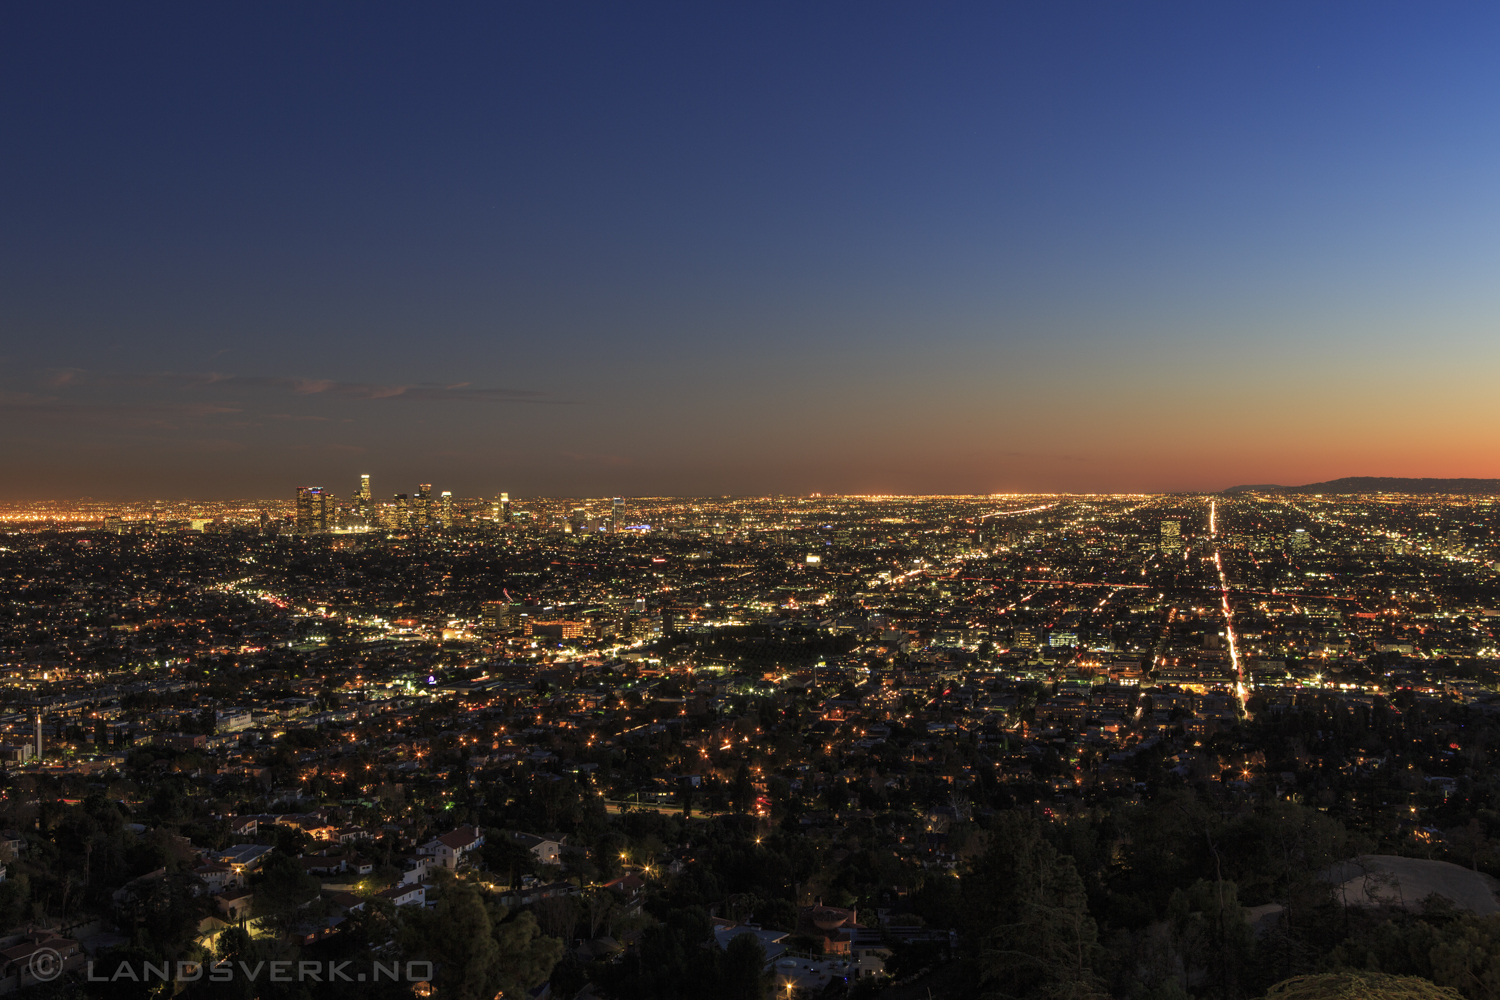 Los Angeles, California.

(Canon EOS 5D Mark III / Canon EF 24-70mm f/2.8 L USM)